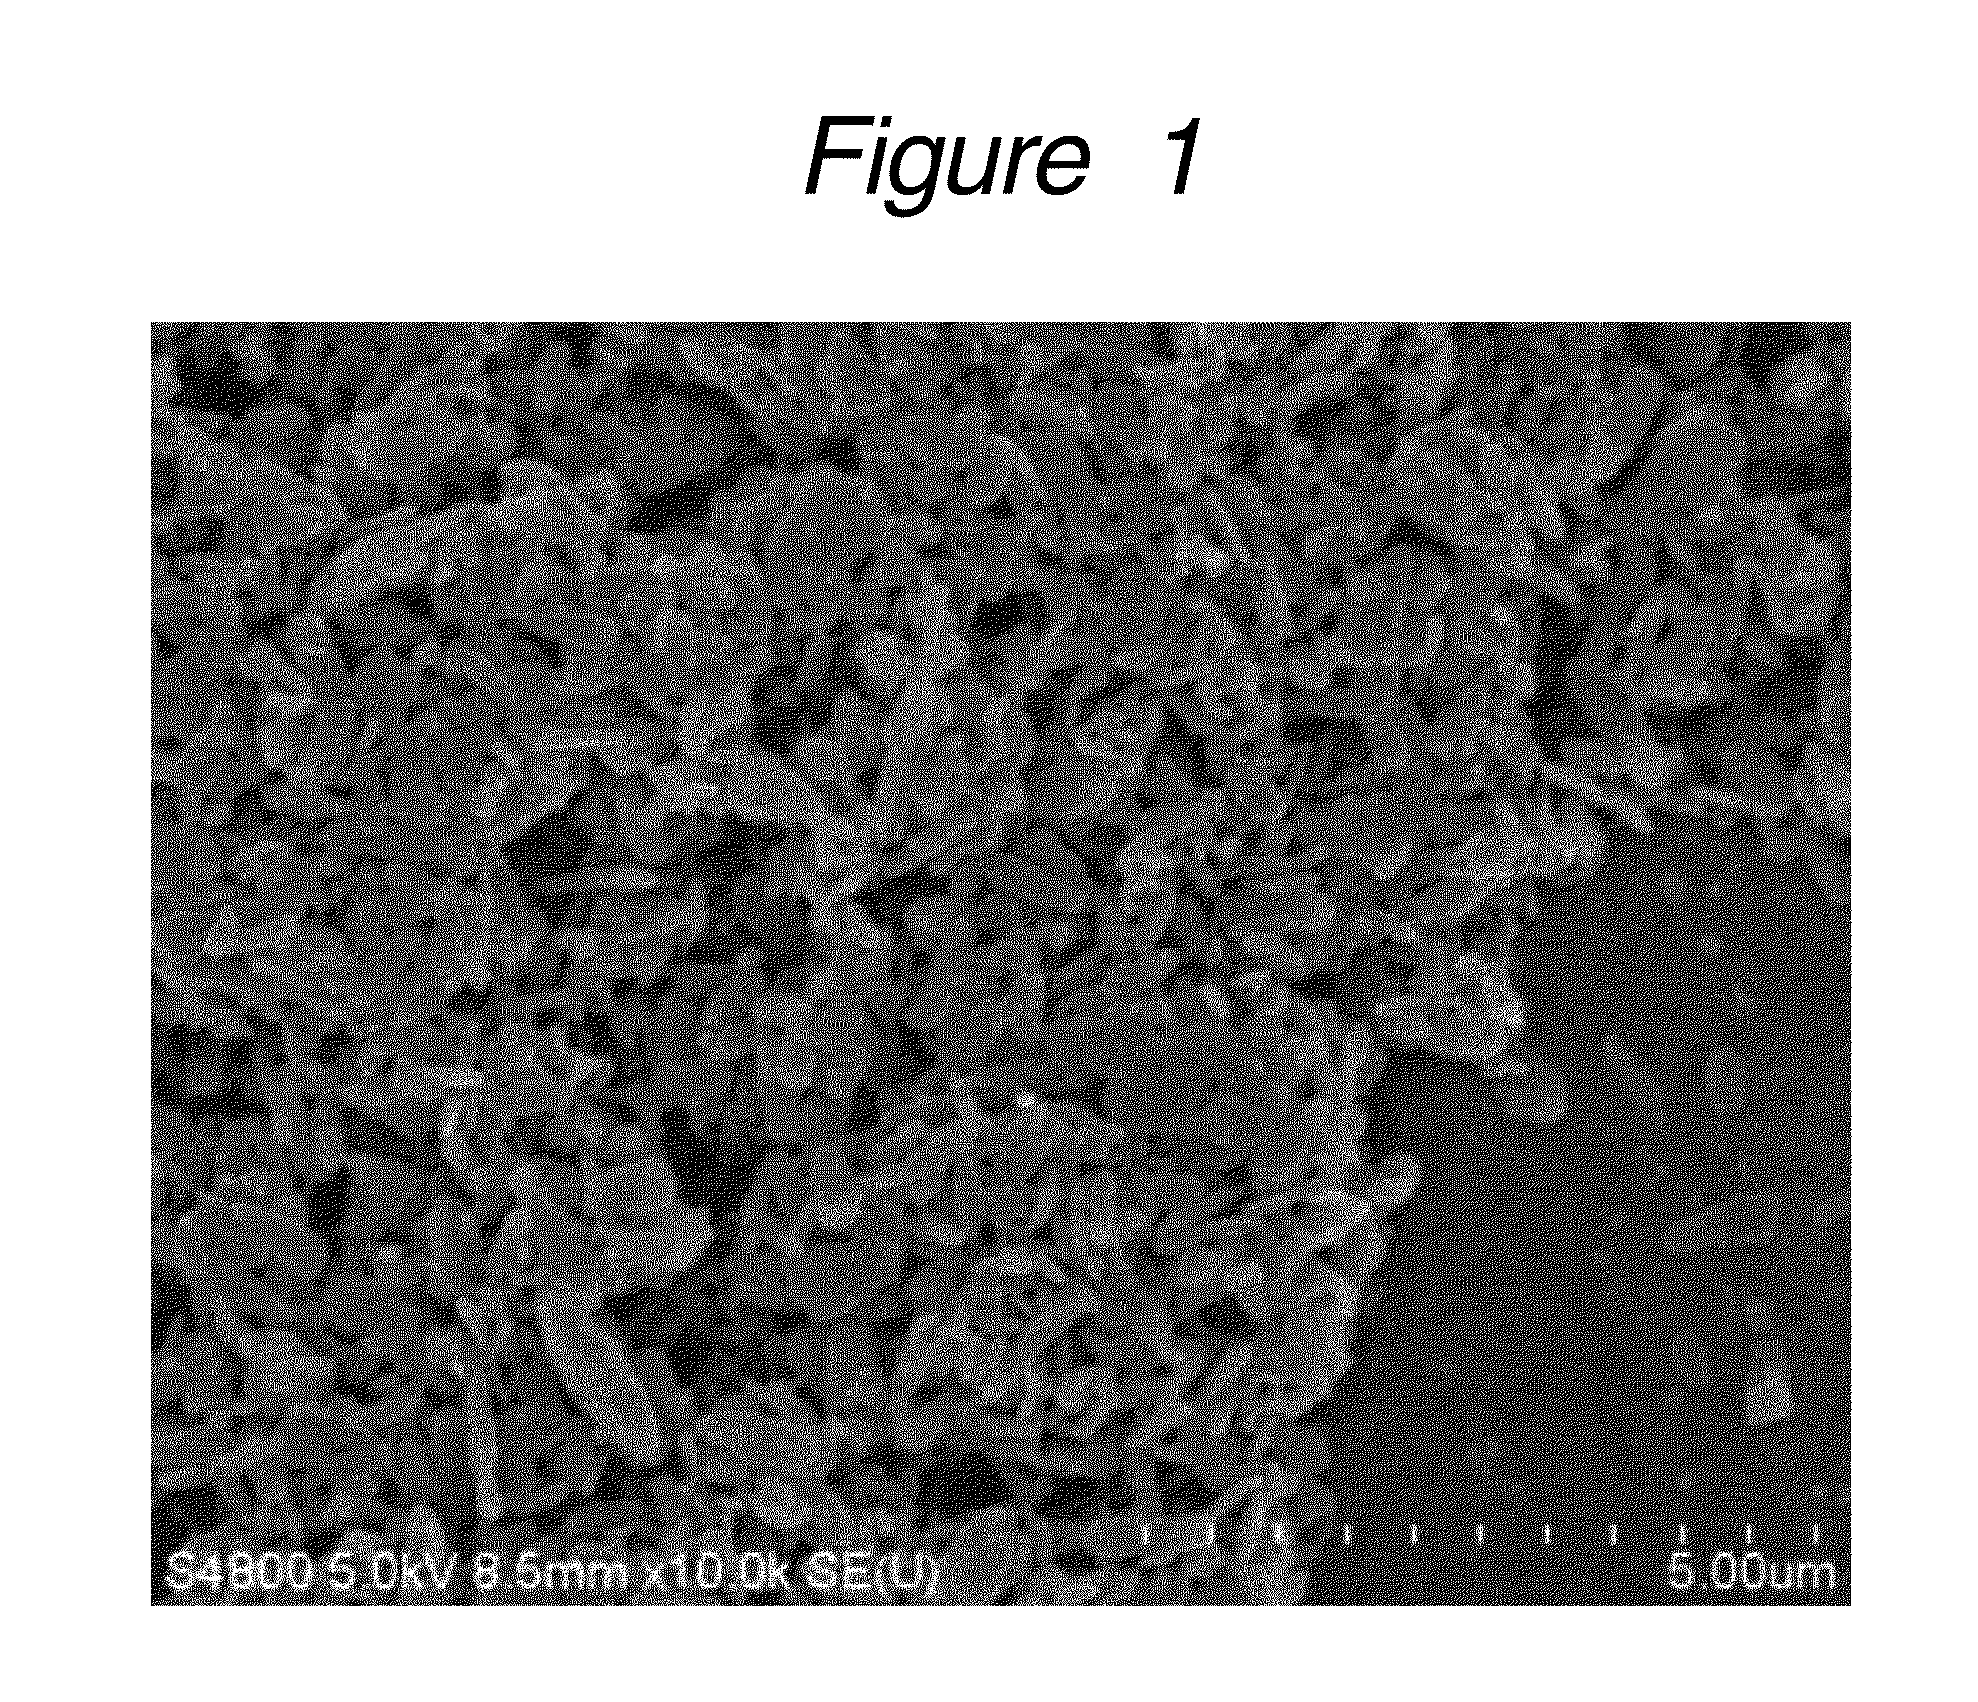 Aqueous dispersion of fine resin particles, method for producing aqueous dispersion of fine resin particles, and method for producing toner particles